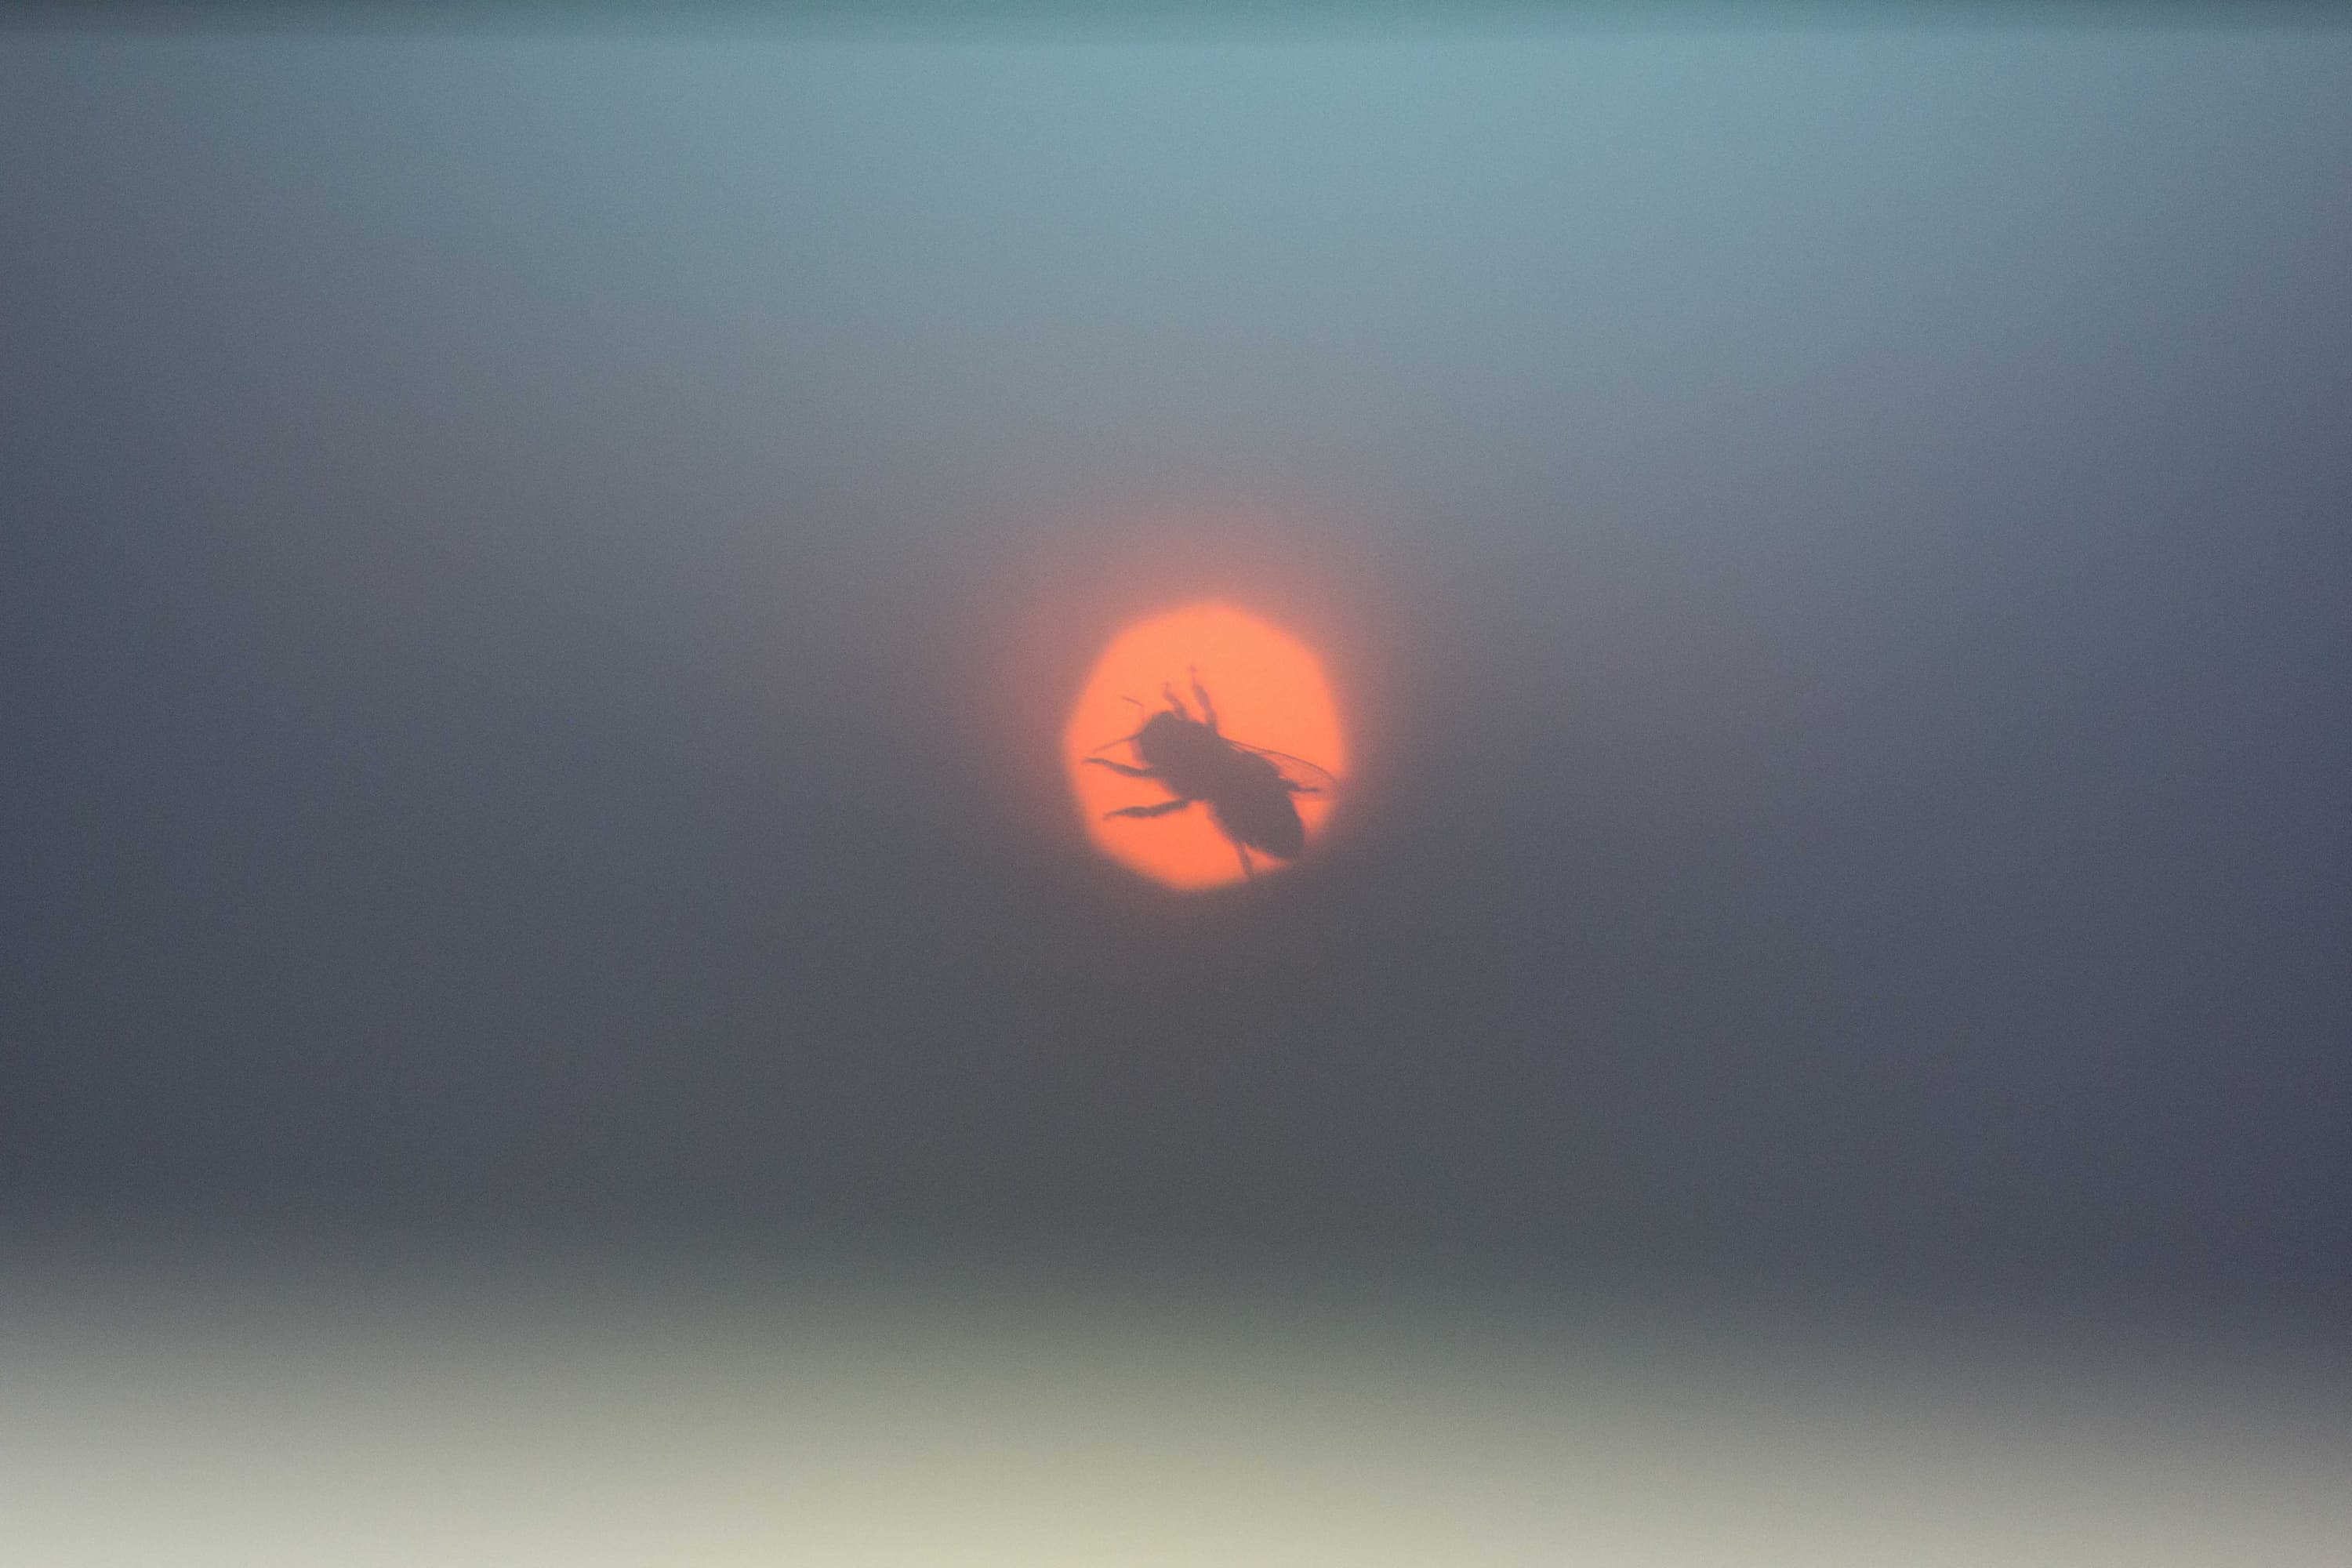 A photo of an eclipse